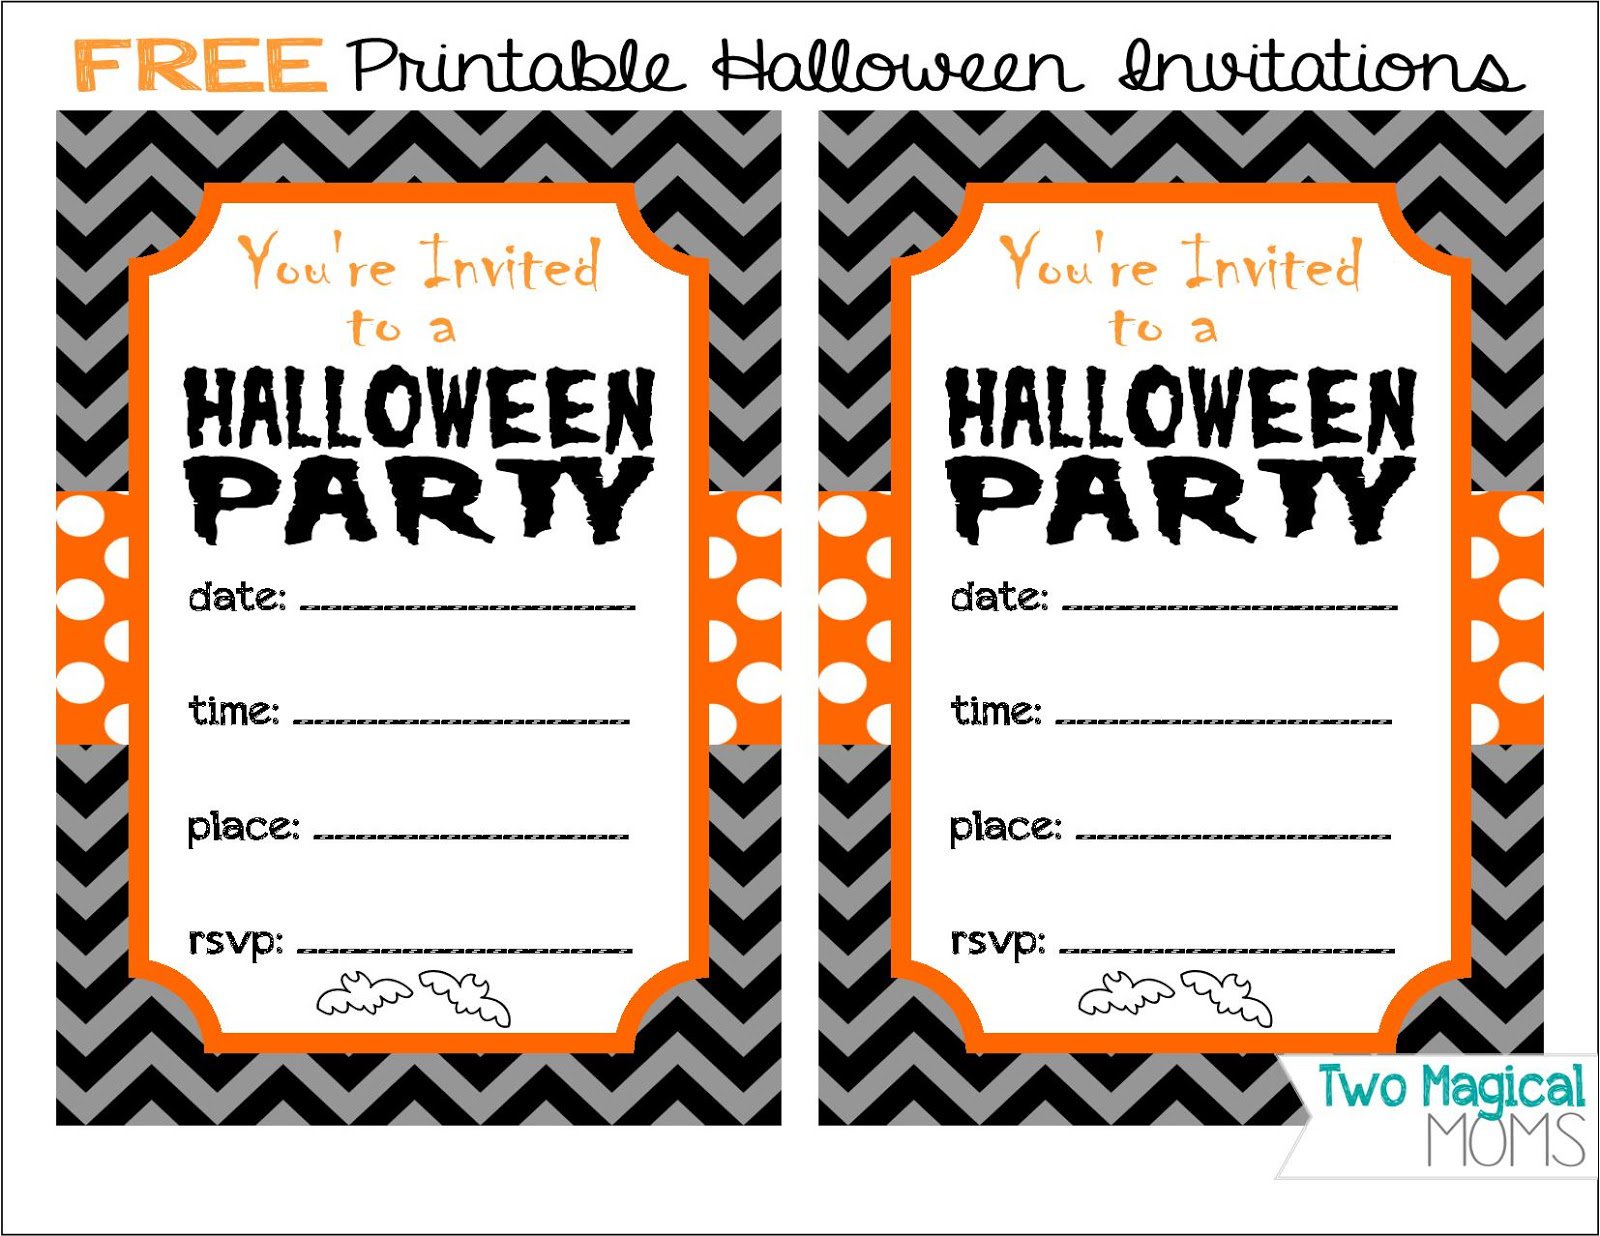 print-out-halloween-invitation-invitation-design-blog